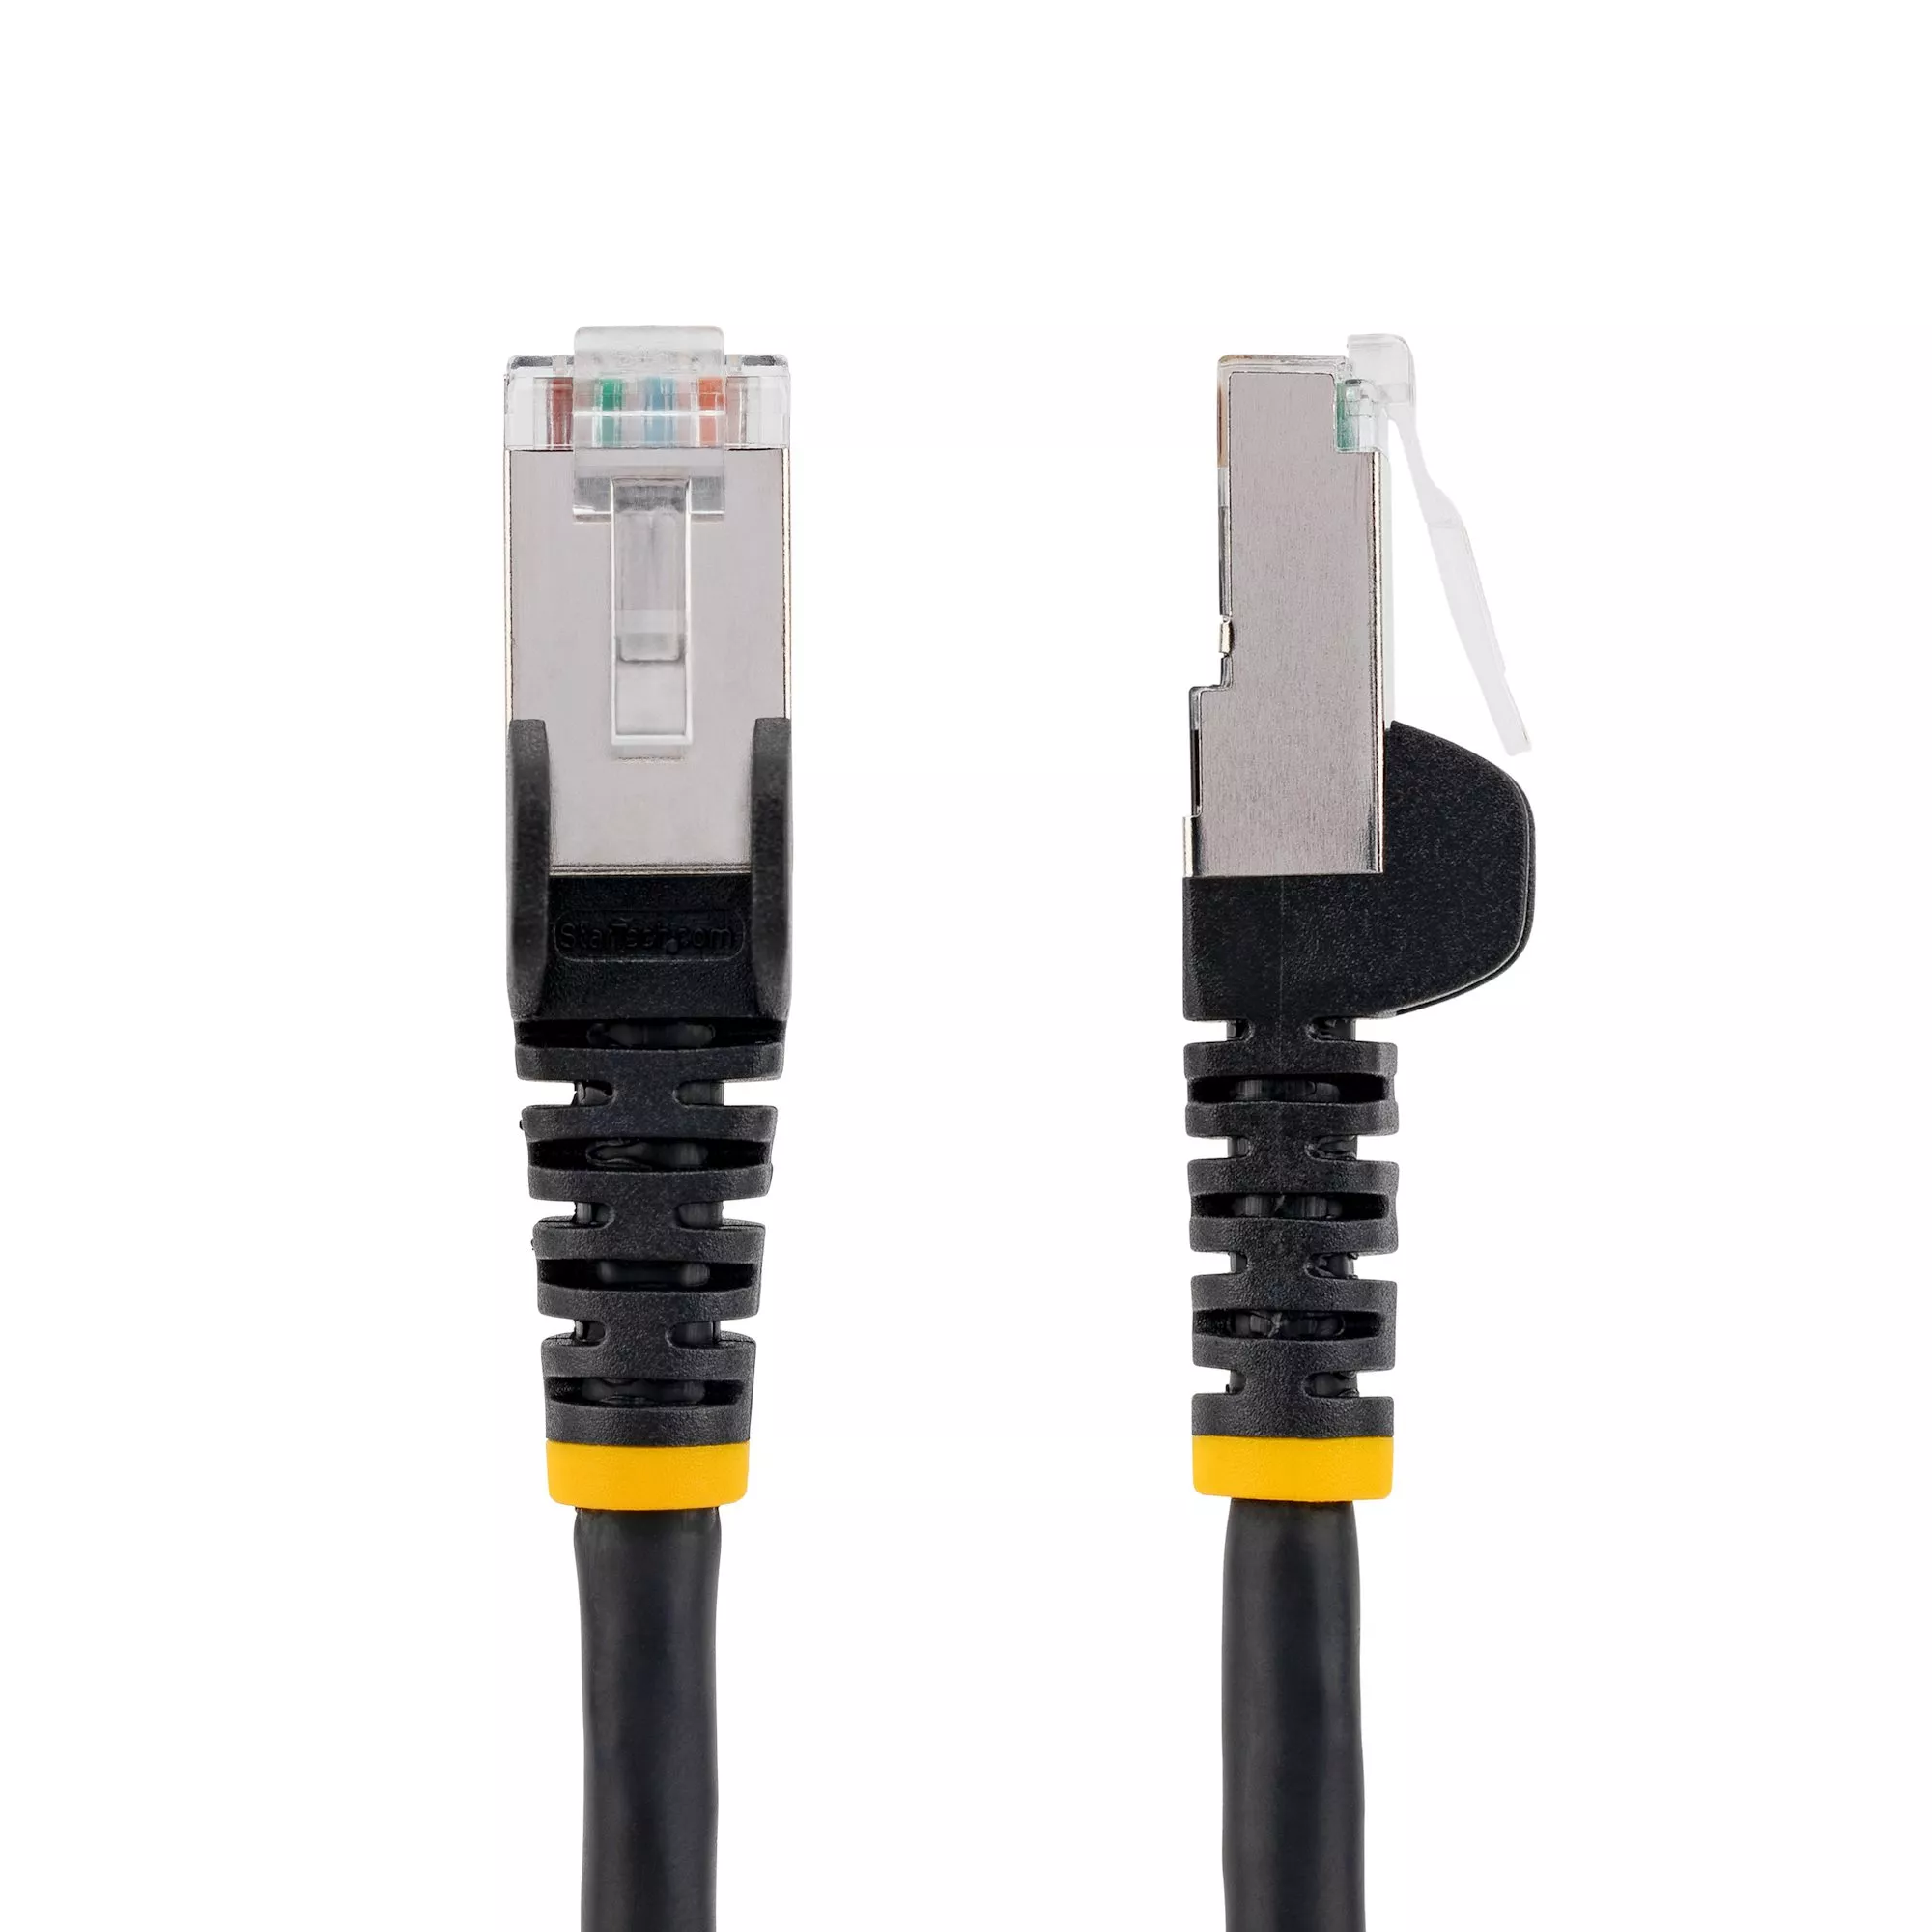 Vente StarTech.com Câble Ethernet CAT6a 5m - Low Smoke StarTech.com au meilleur prix - visuel 2